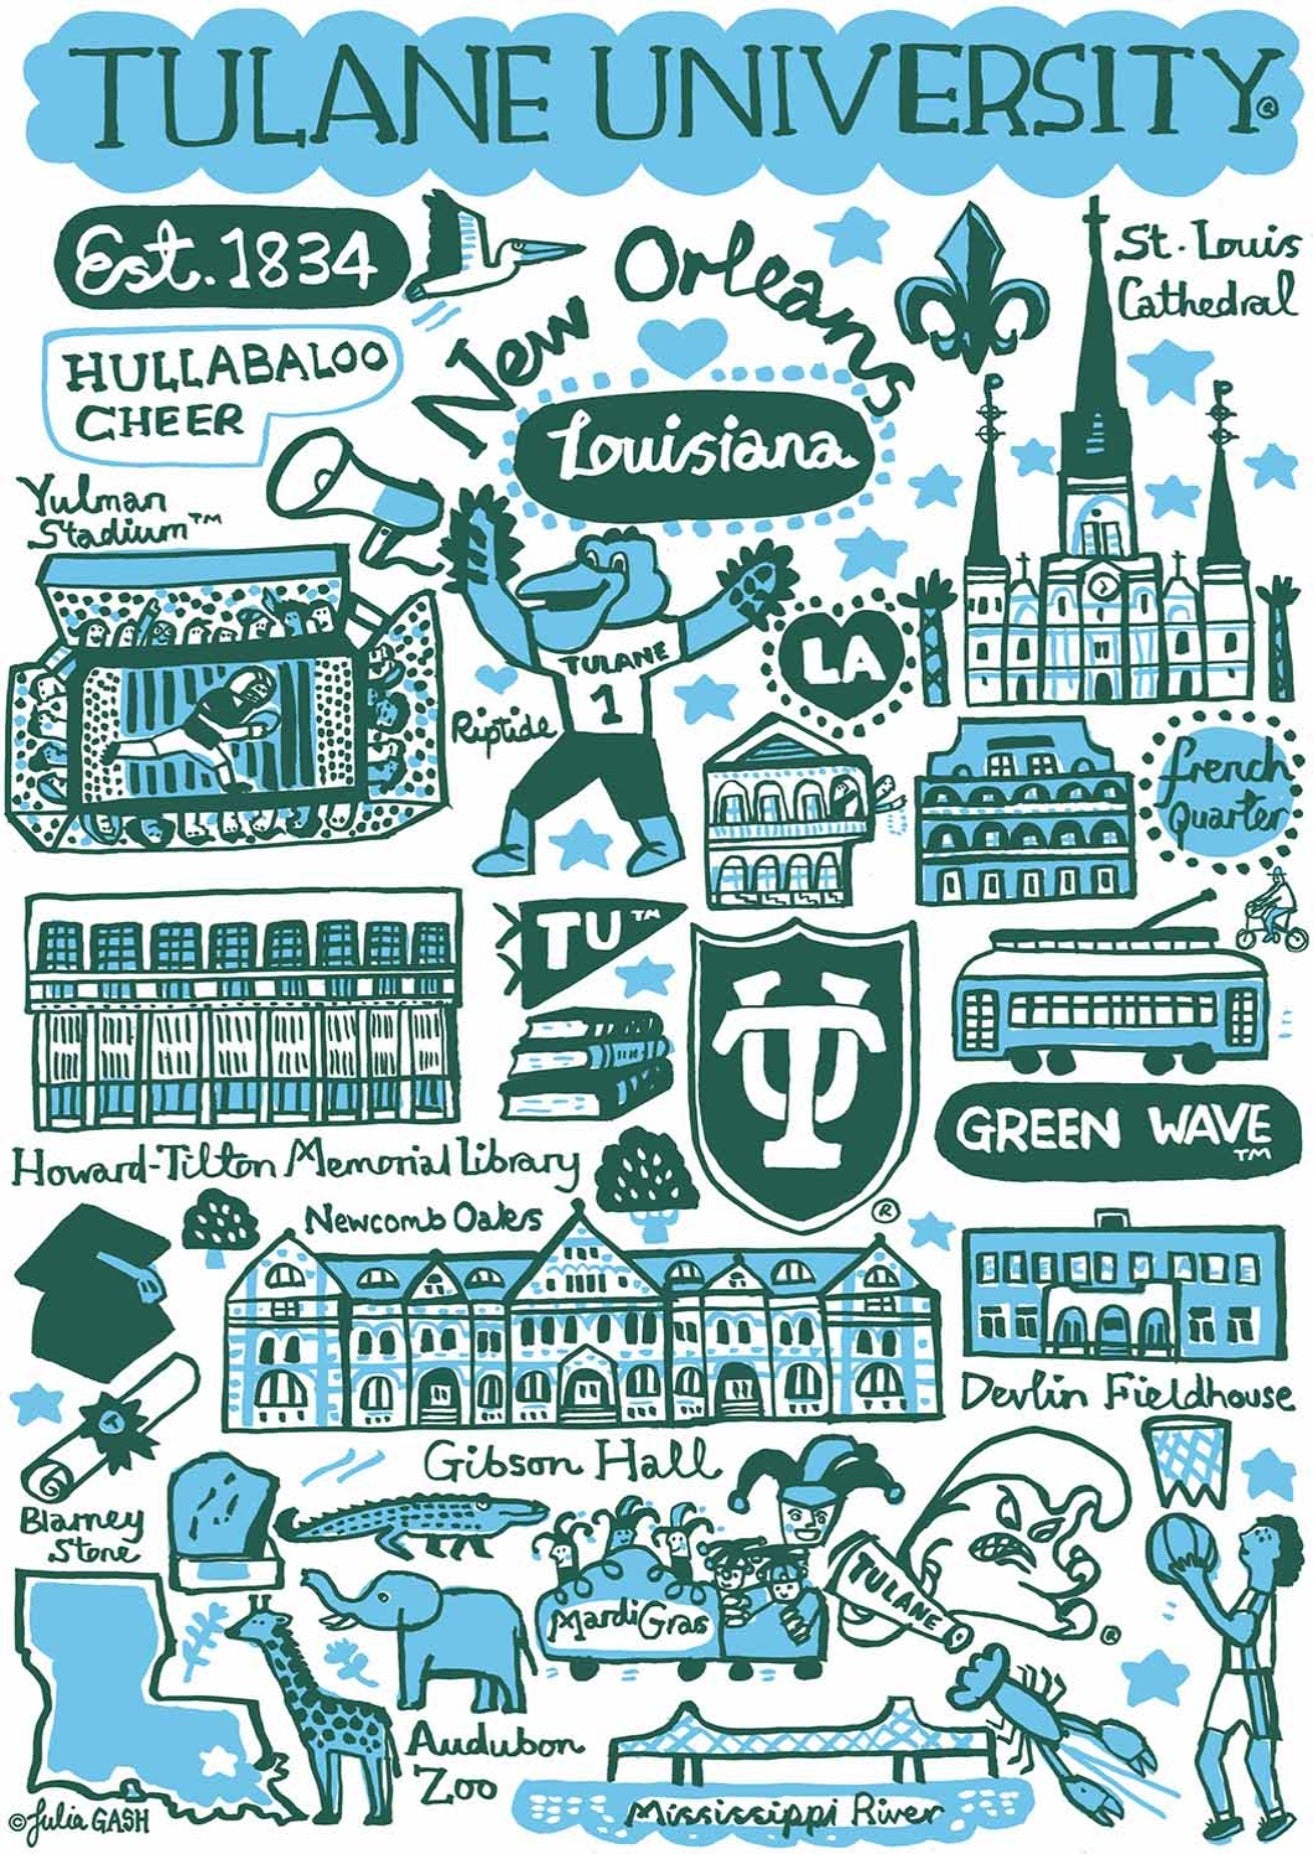 Tulane University by Julia Gash